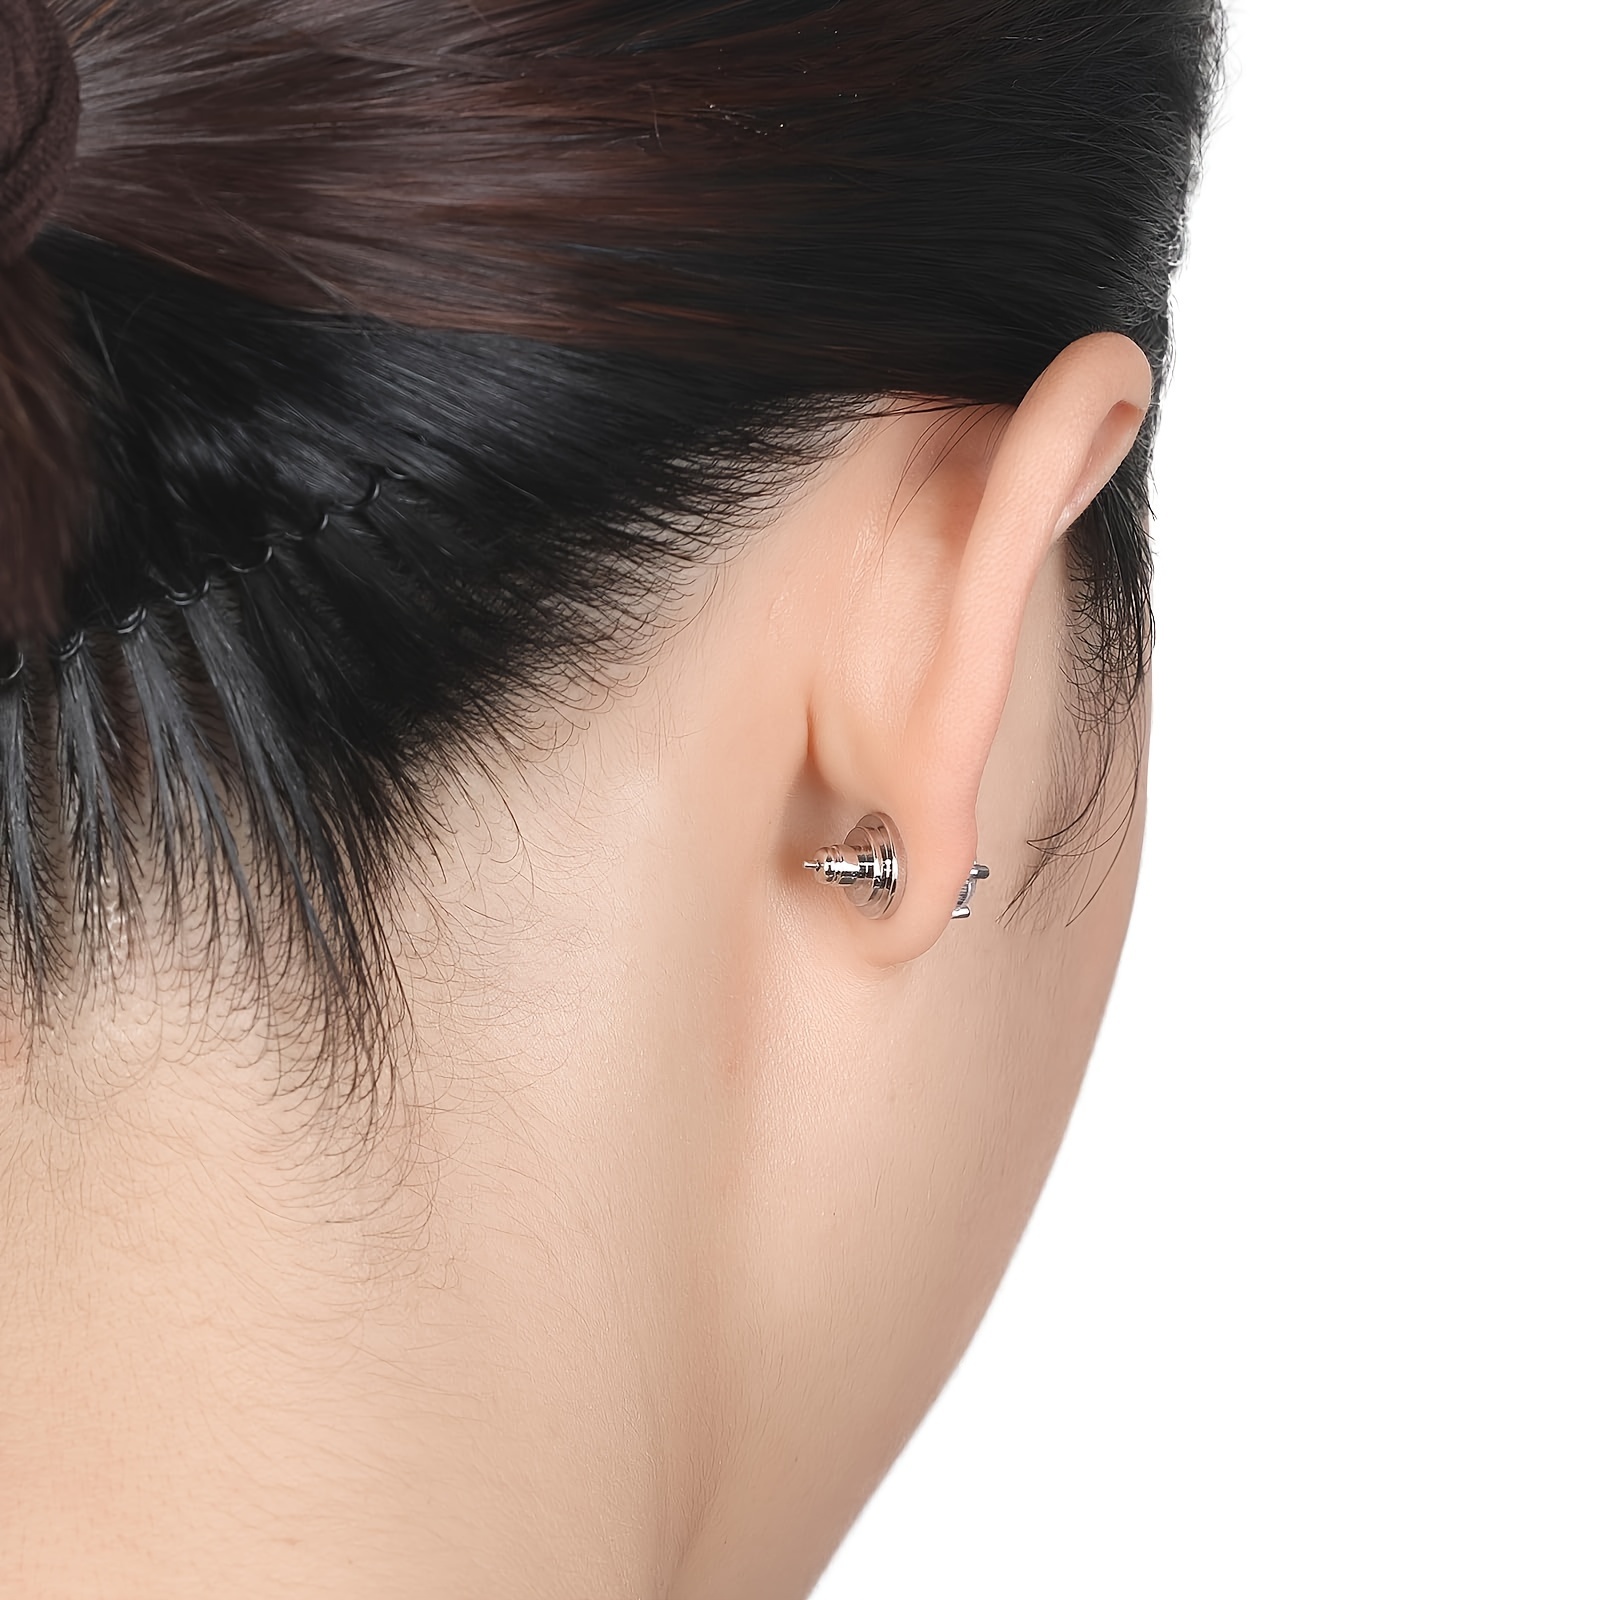 3 Pairs Earring Lifters,adjustable Earring Backs For Heavy Earring